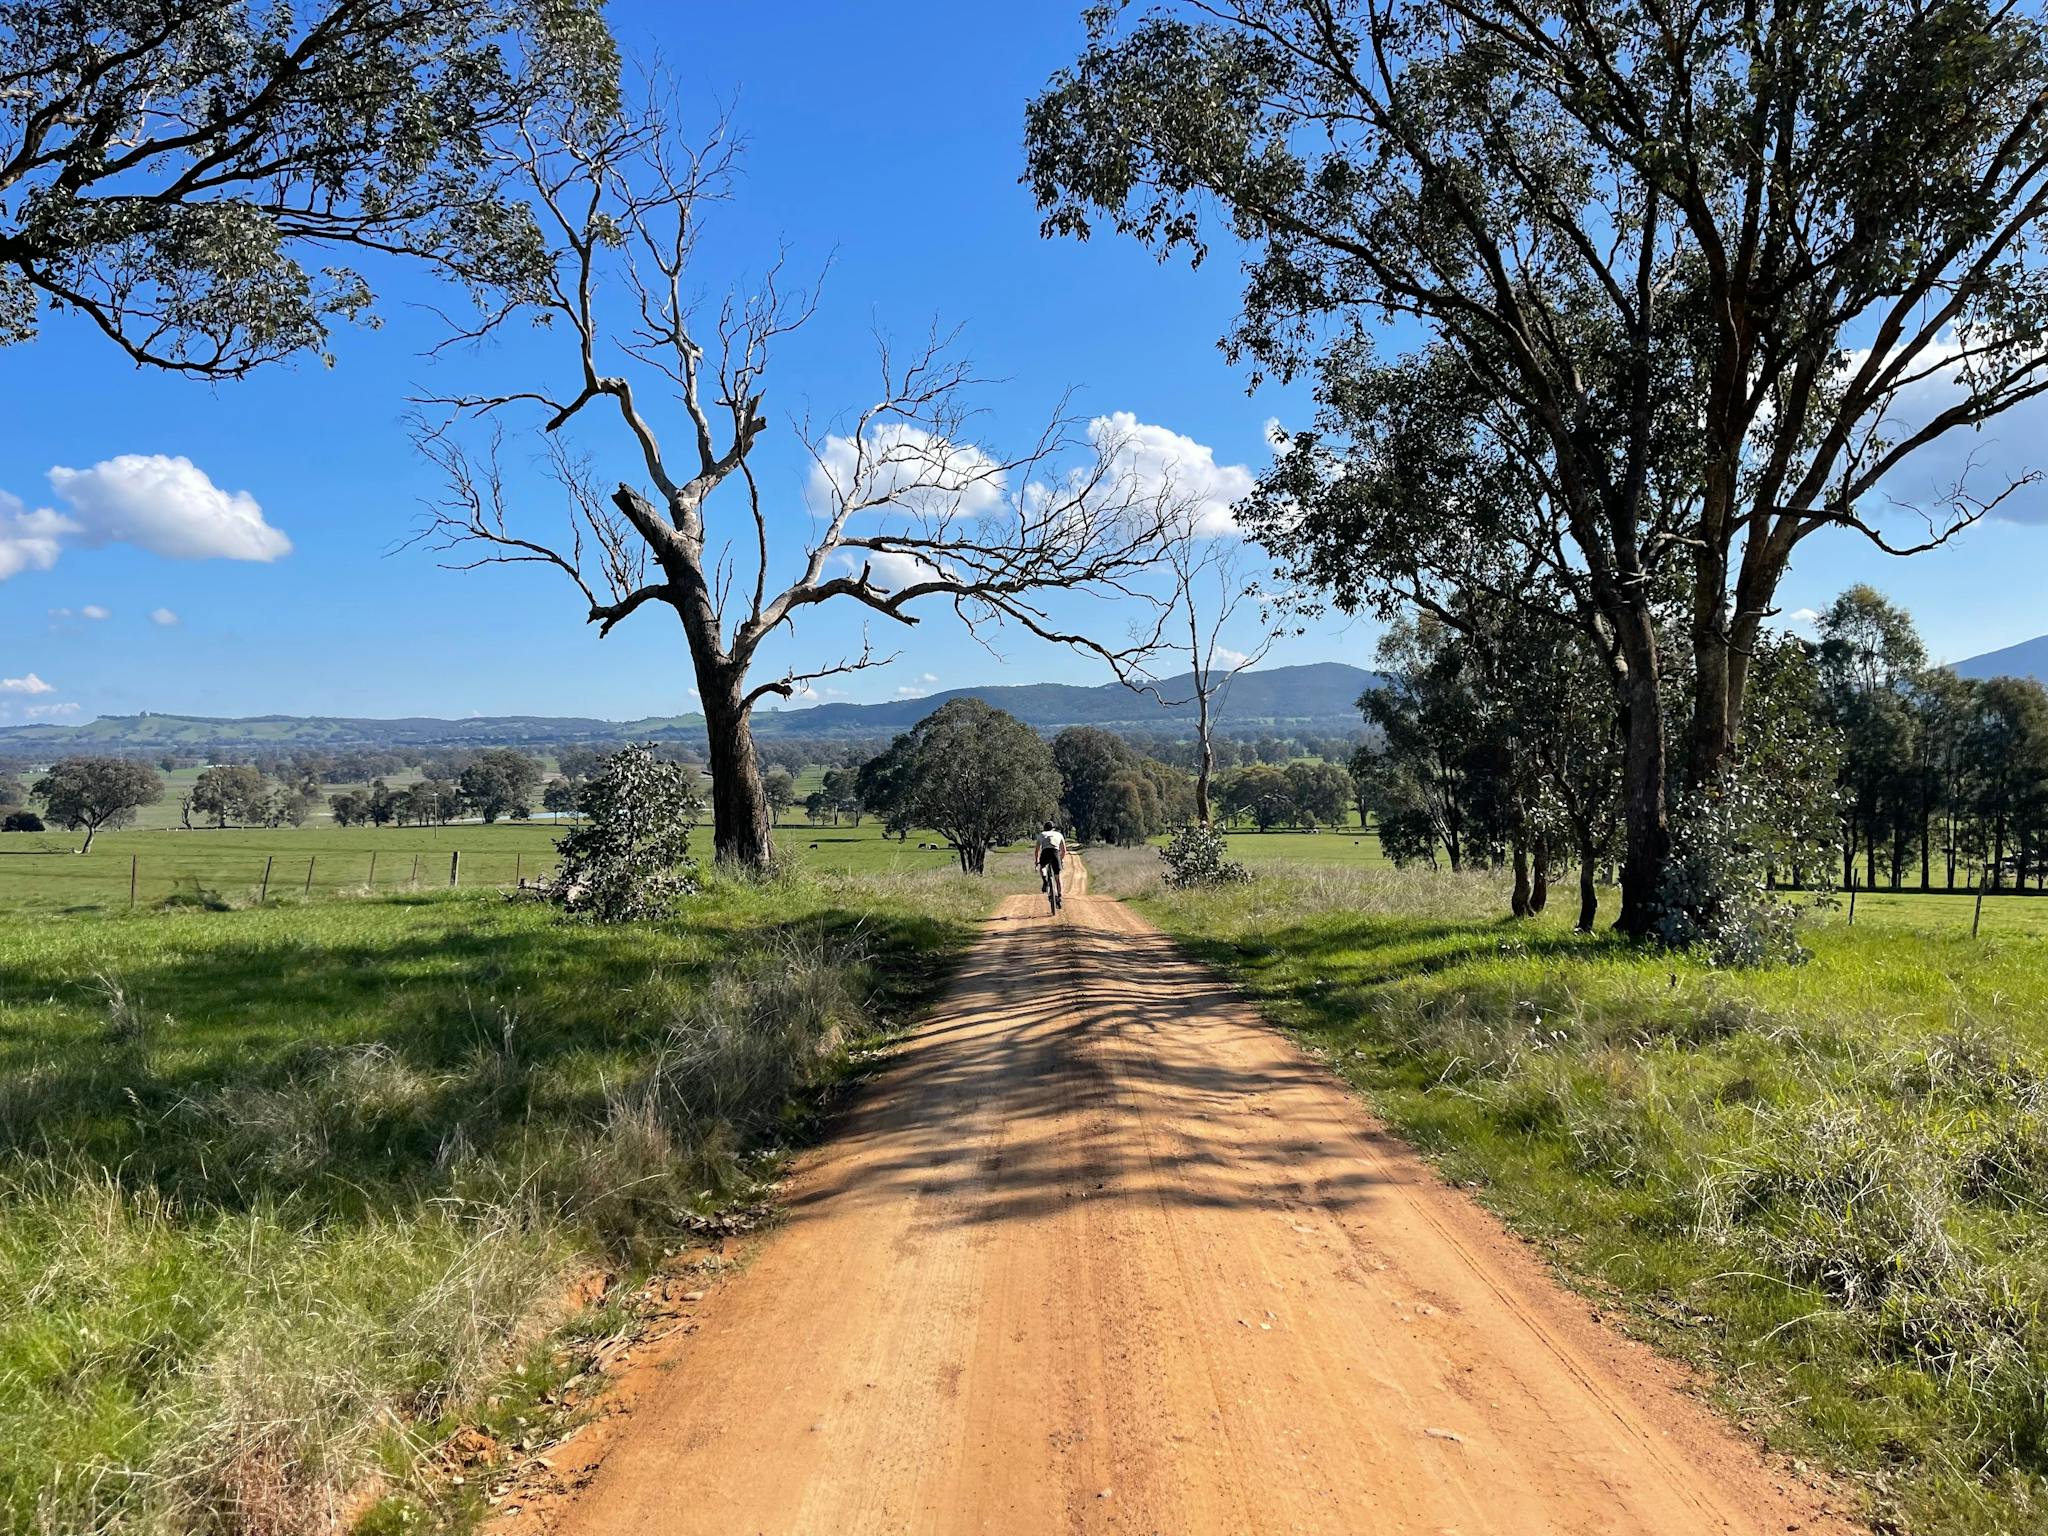 Gravel road, grass, farm paddocks, gum trees, cyclist in distance view of hills, blue sky